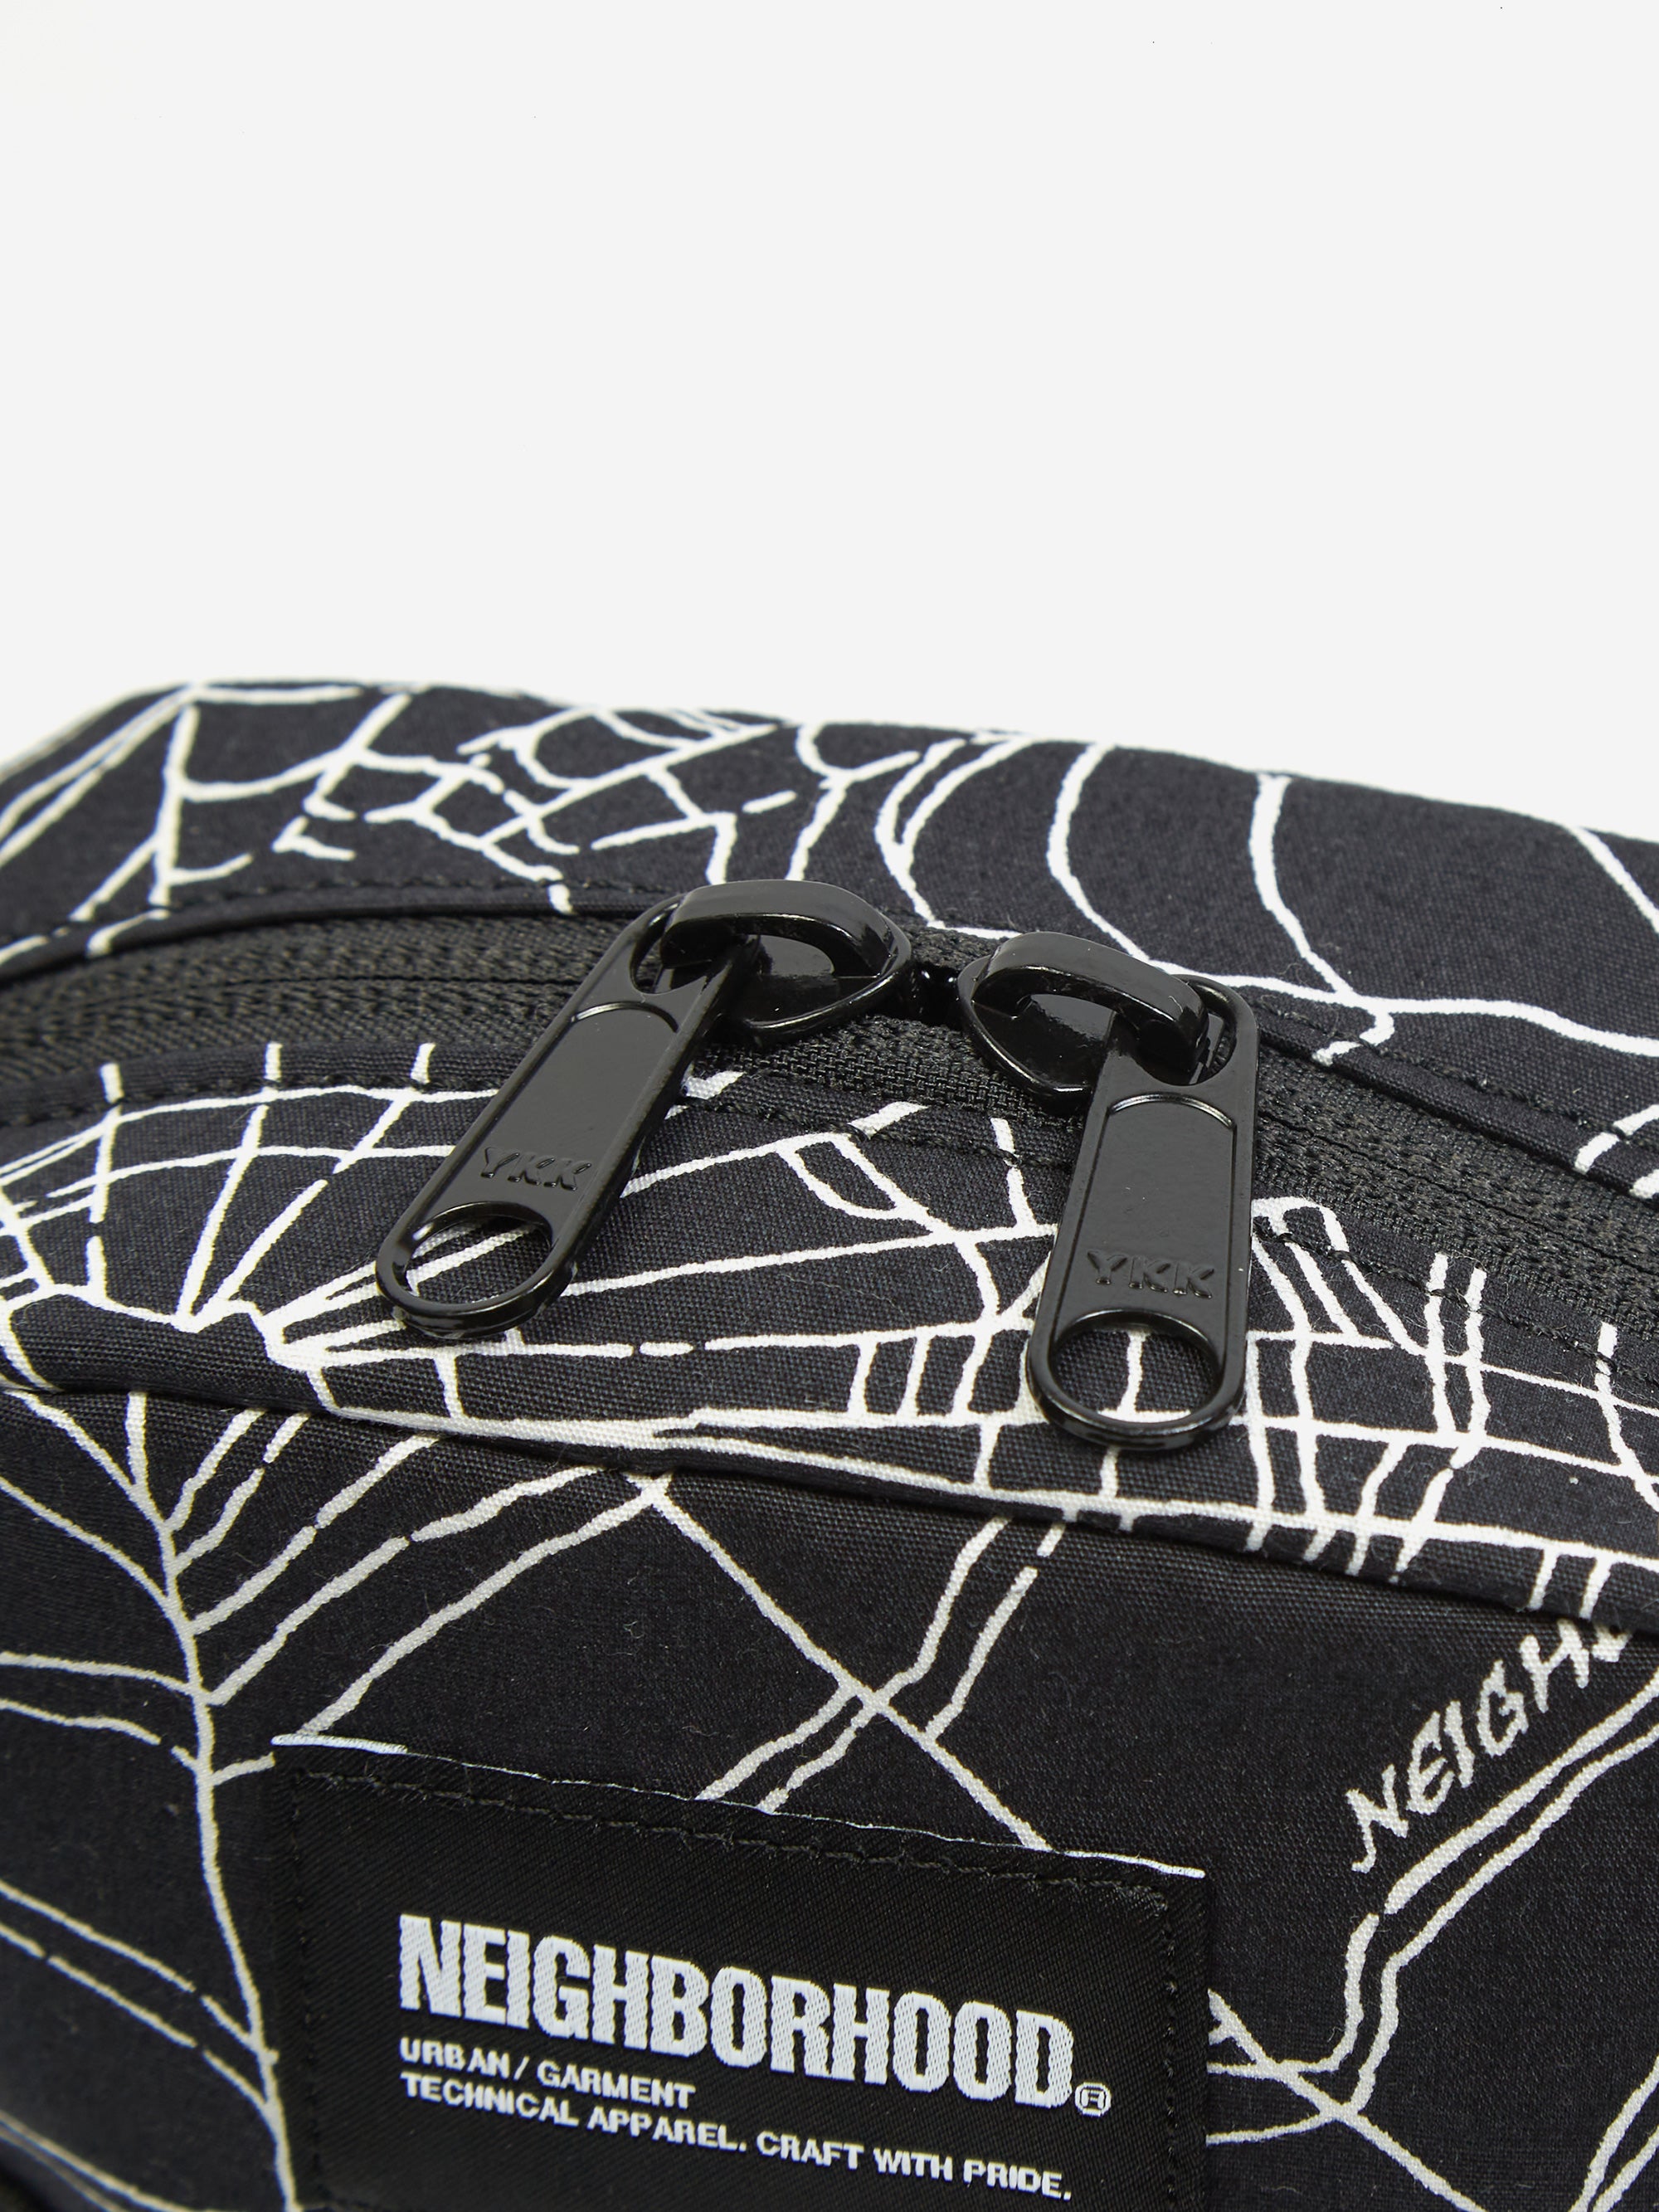 Neighborhood Spiderweb Shoulder Bag - Black